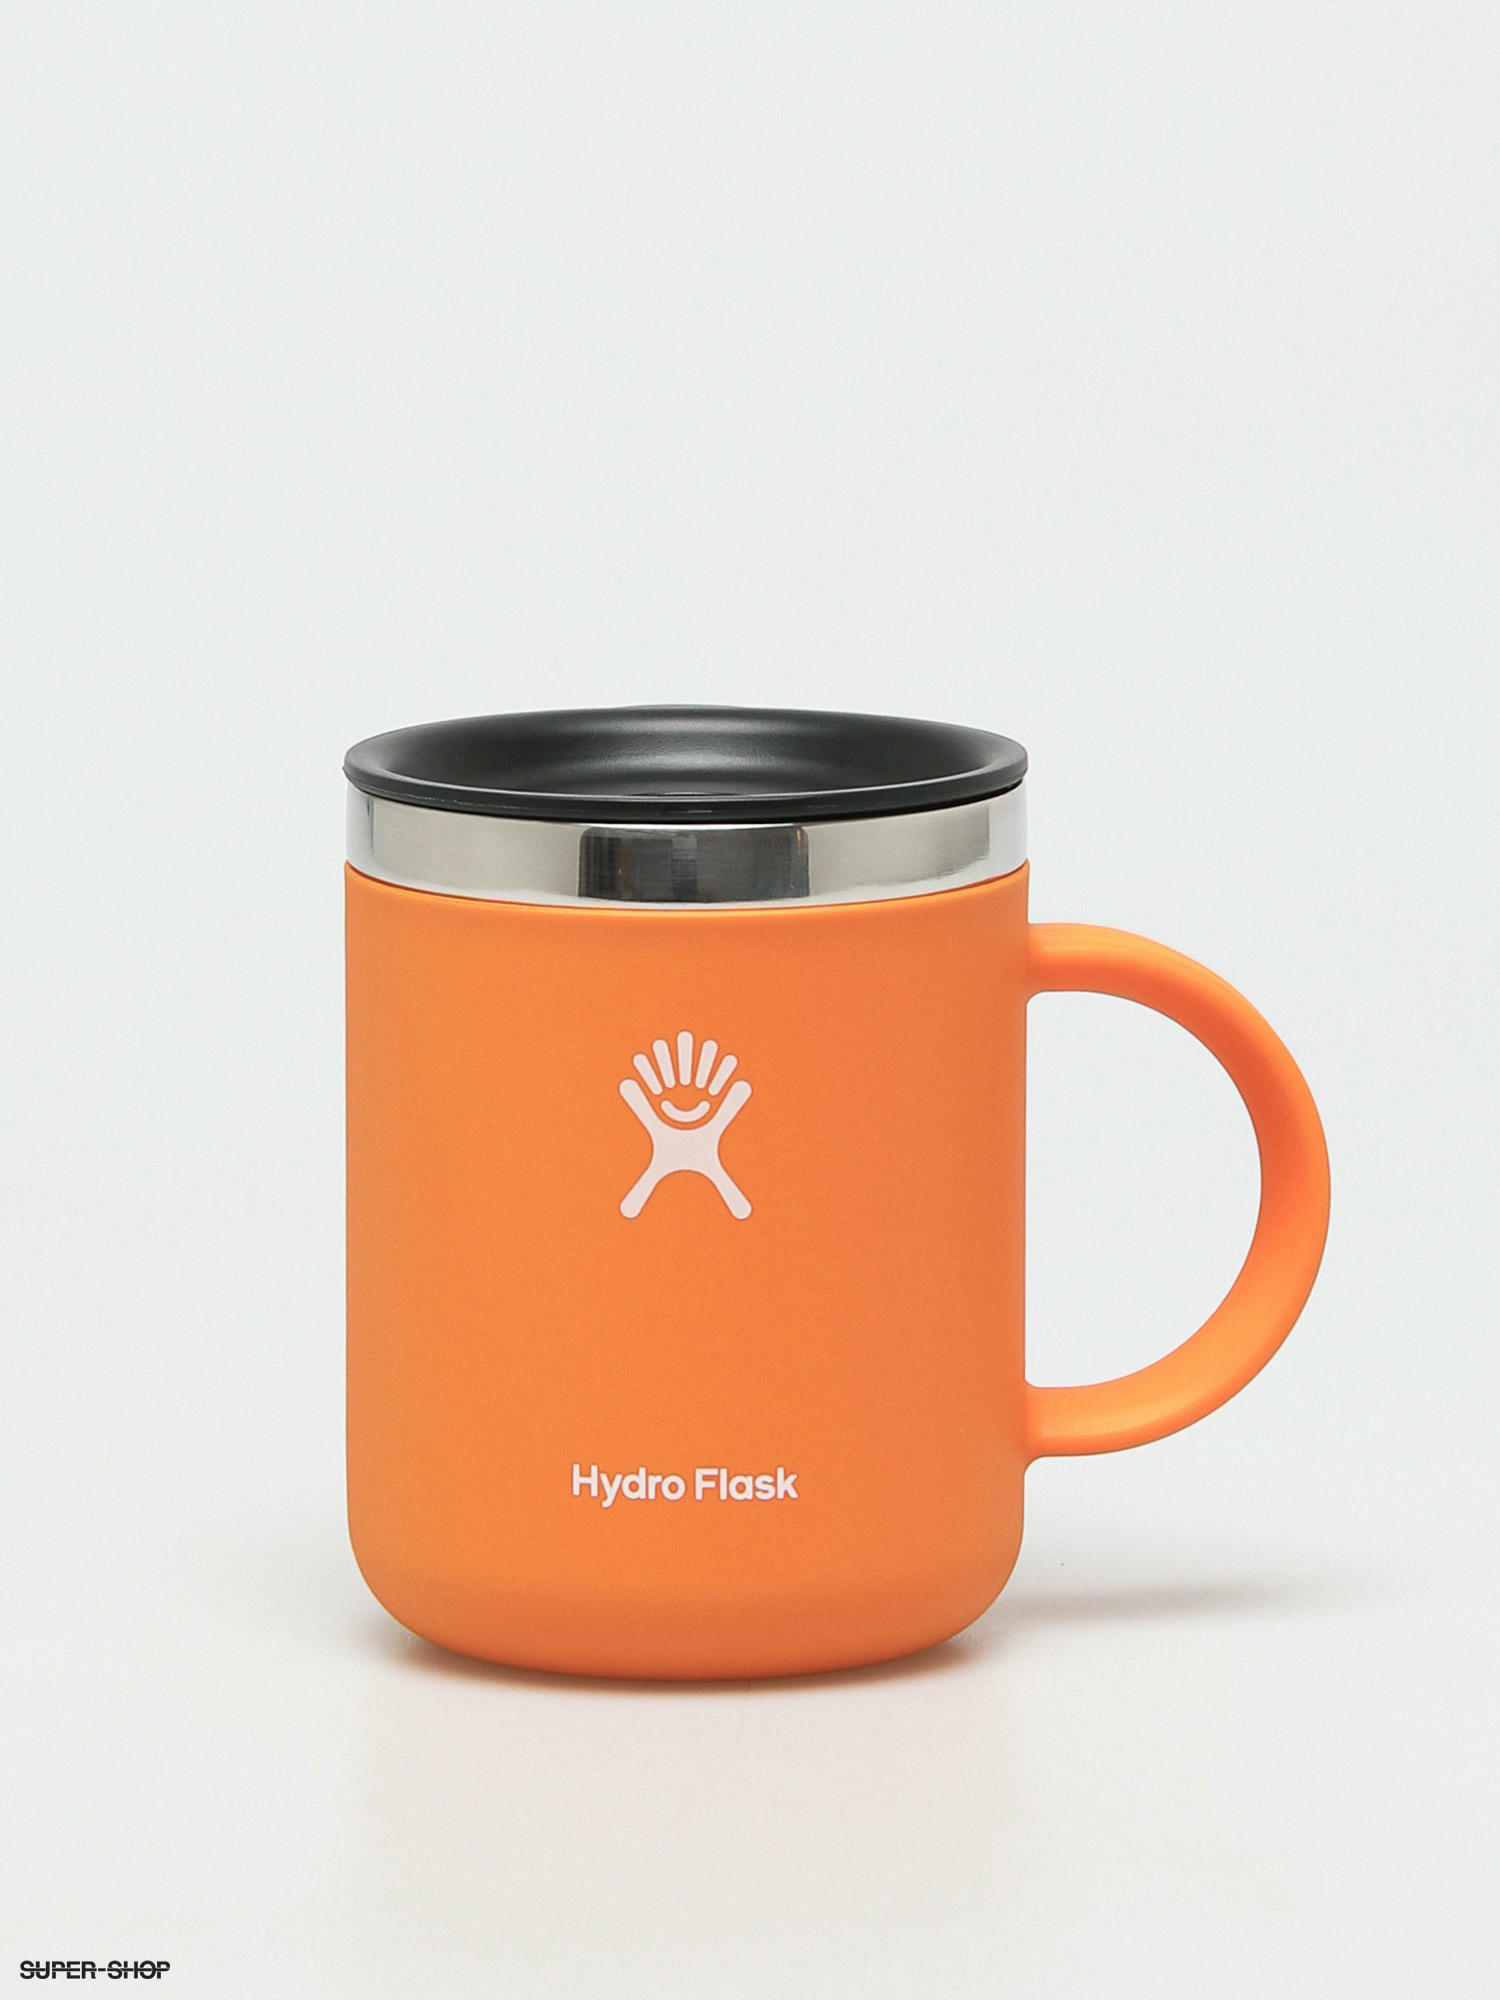 https://static.super-shop.com/1267100-hydro-flask-coffe-mug-354ml-cup-clementine.jpg?w=1920